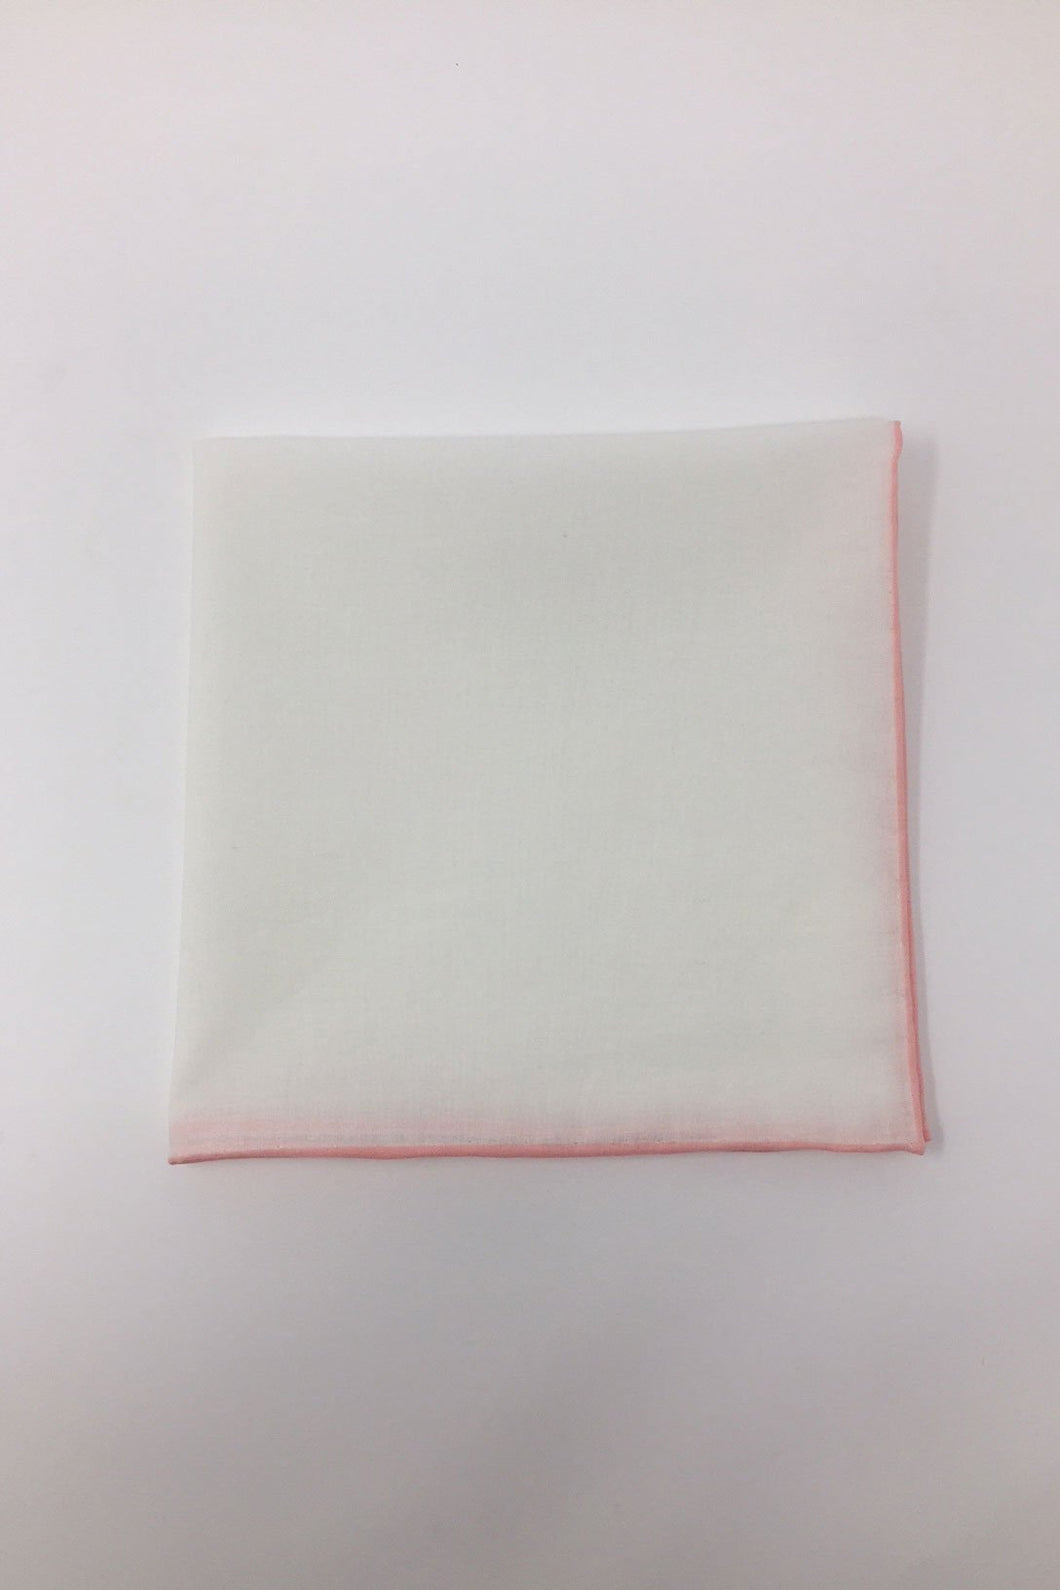 Cristoforo Cardi White Cotton with Pink Border Pocket Square